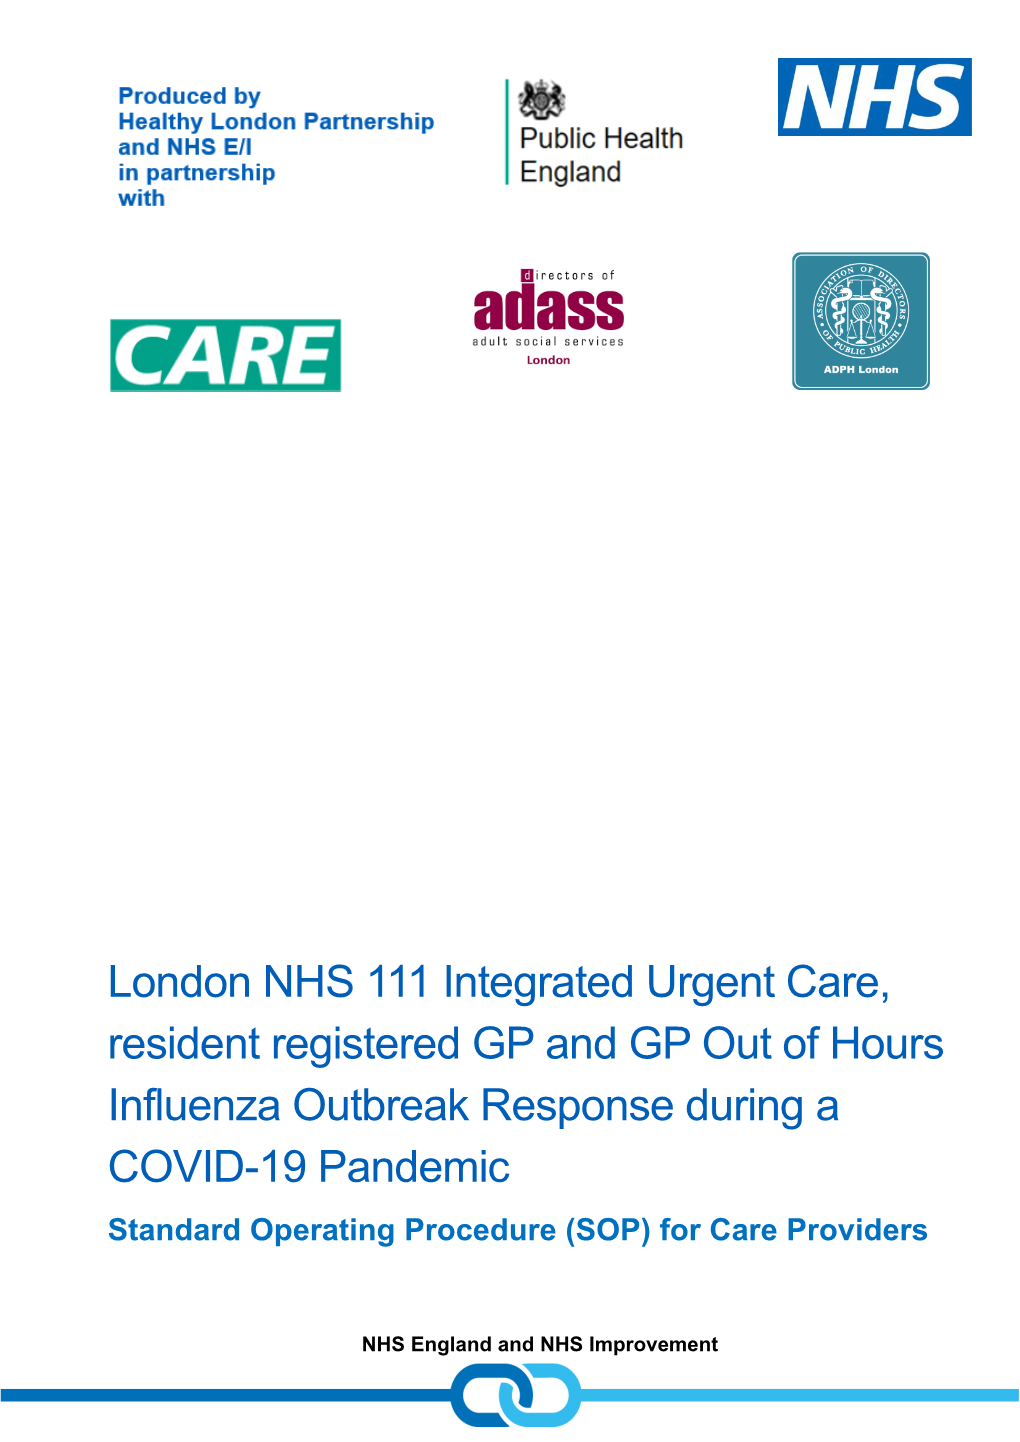 London NHS 111 IUC and GPOOH Influenza